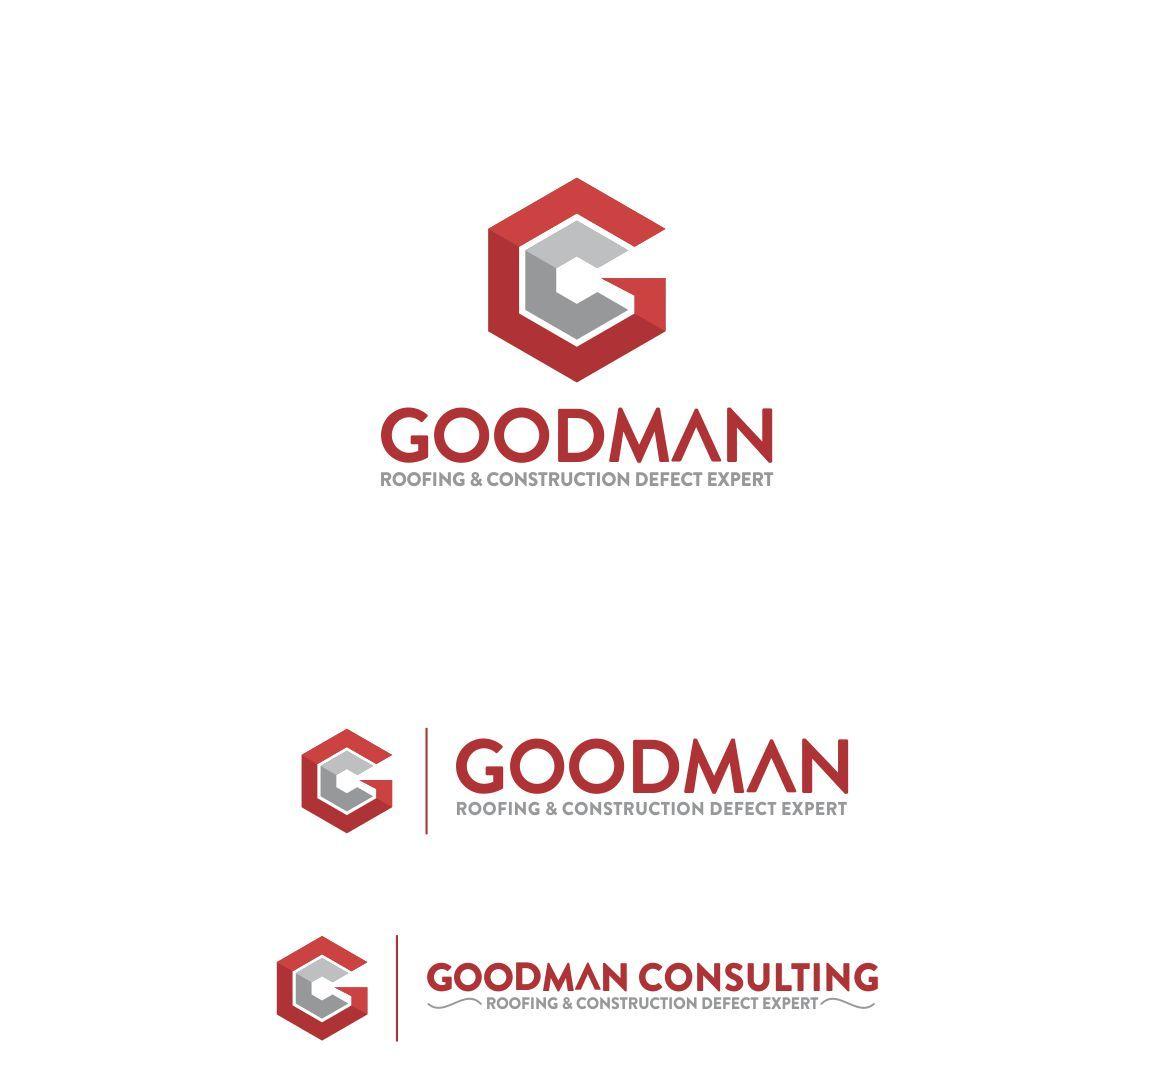 Goodman Logo - Serious, Professional, Construction Logo Design for Goodman